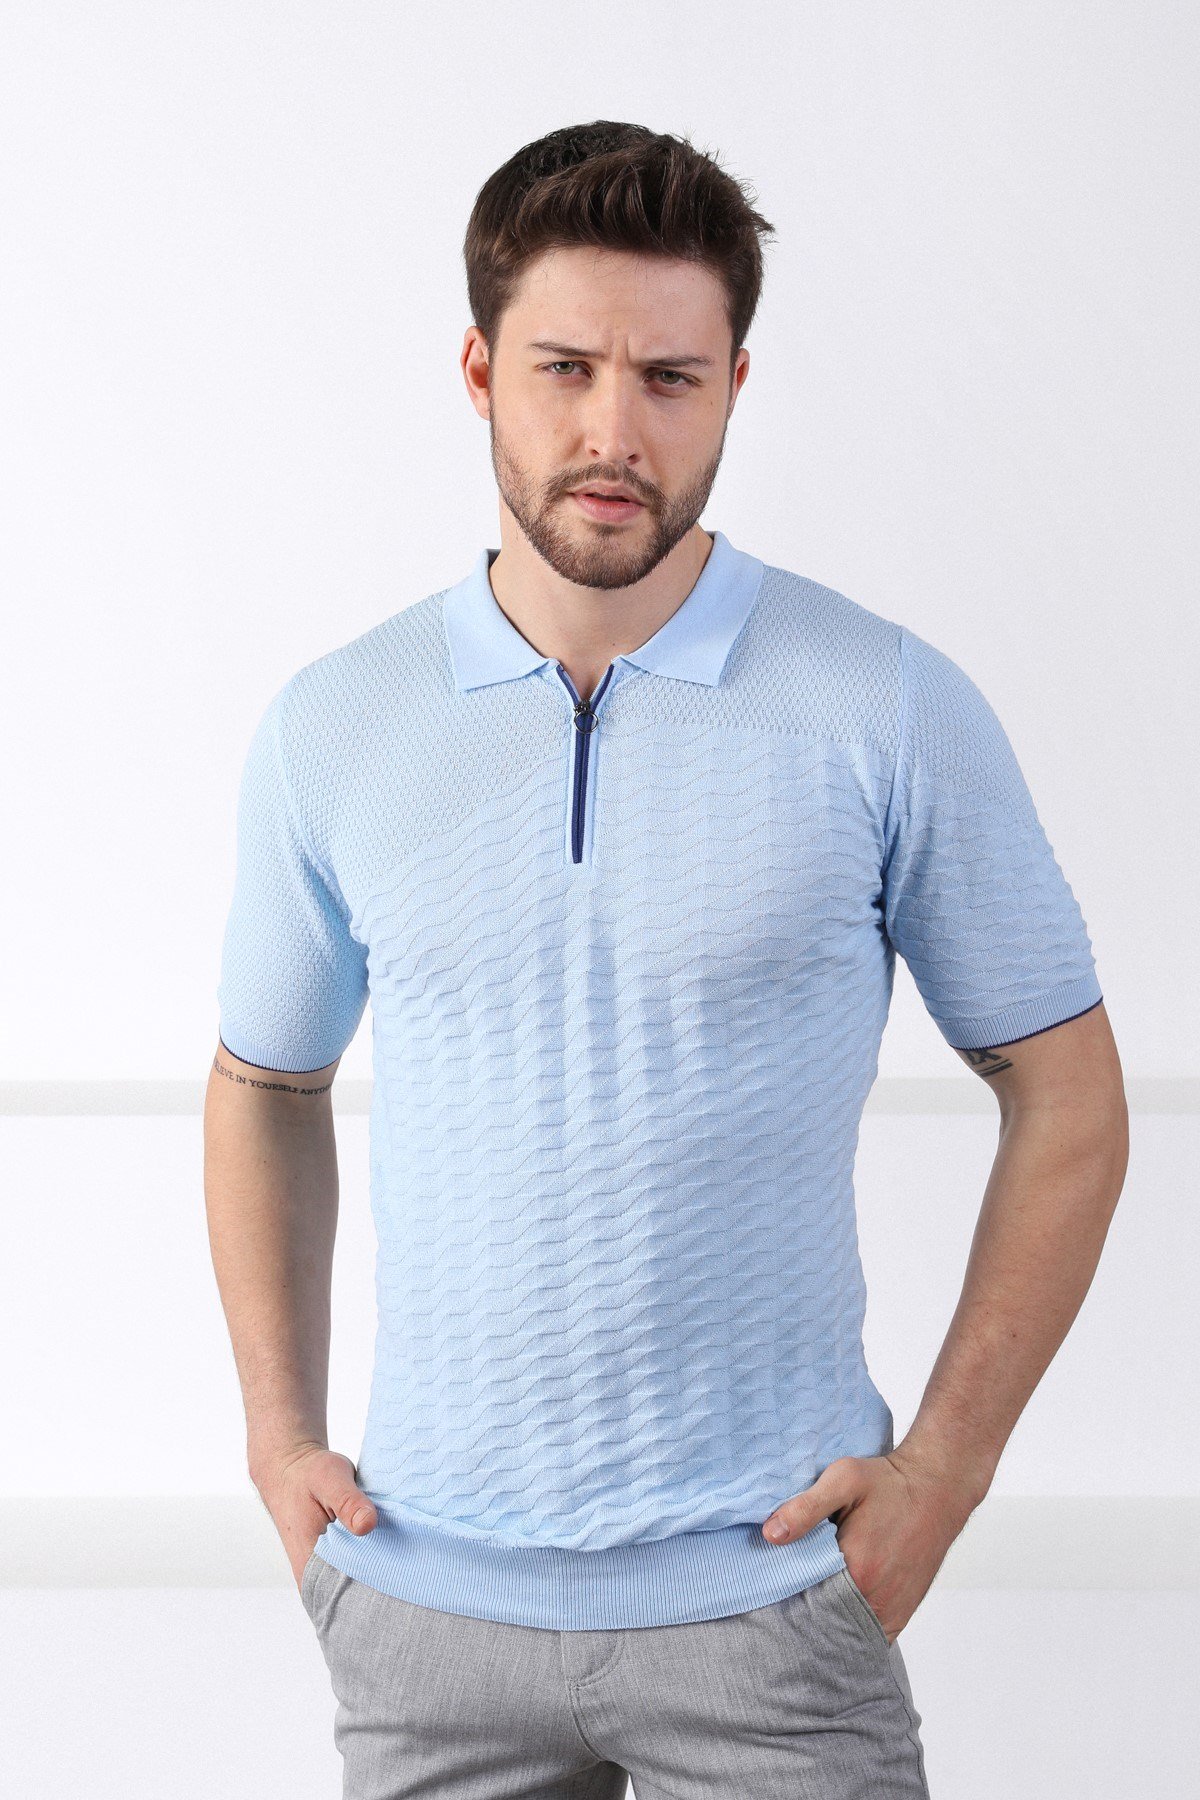 Ferraro Mavi Polo Yaka Fermuarlı Erkek Pamuk Triko T-Shirt | Erkek Giyim |  modaferraro.com.tr